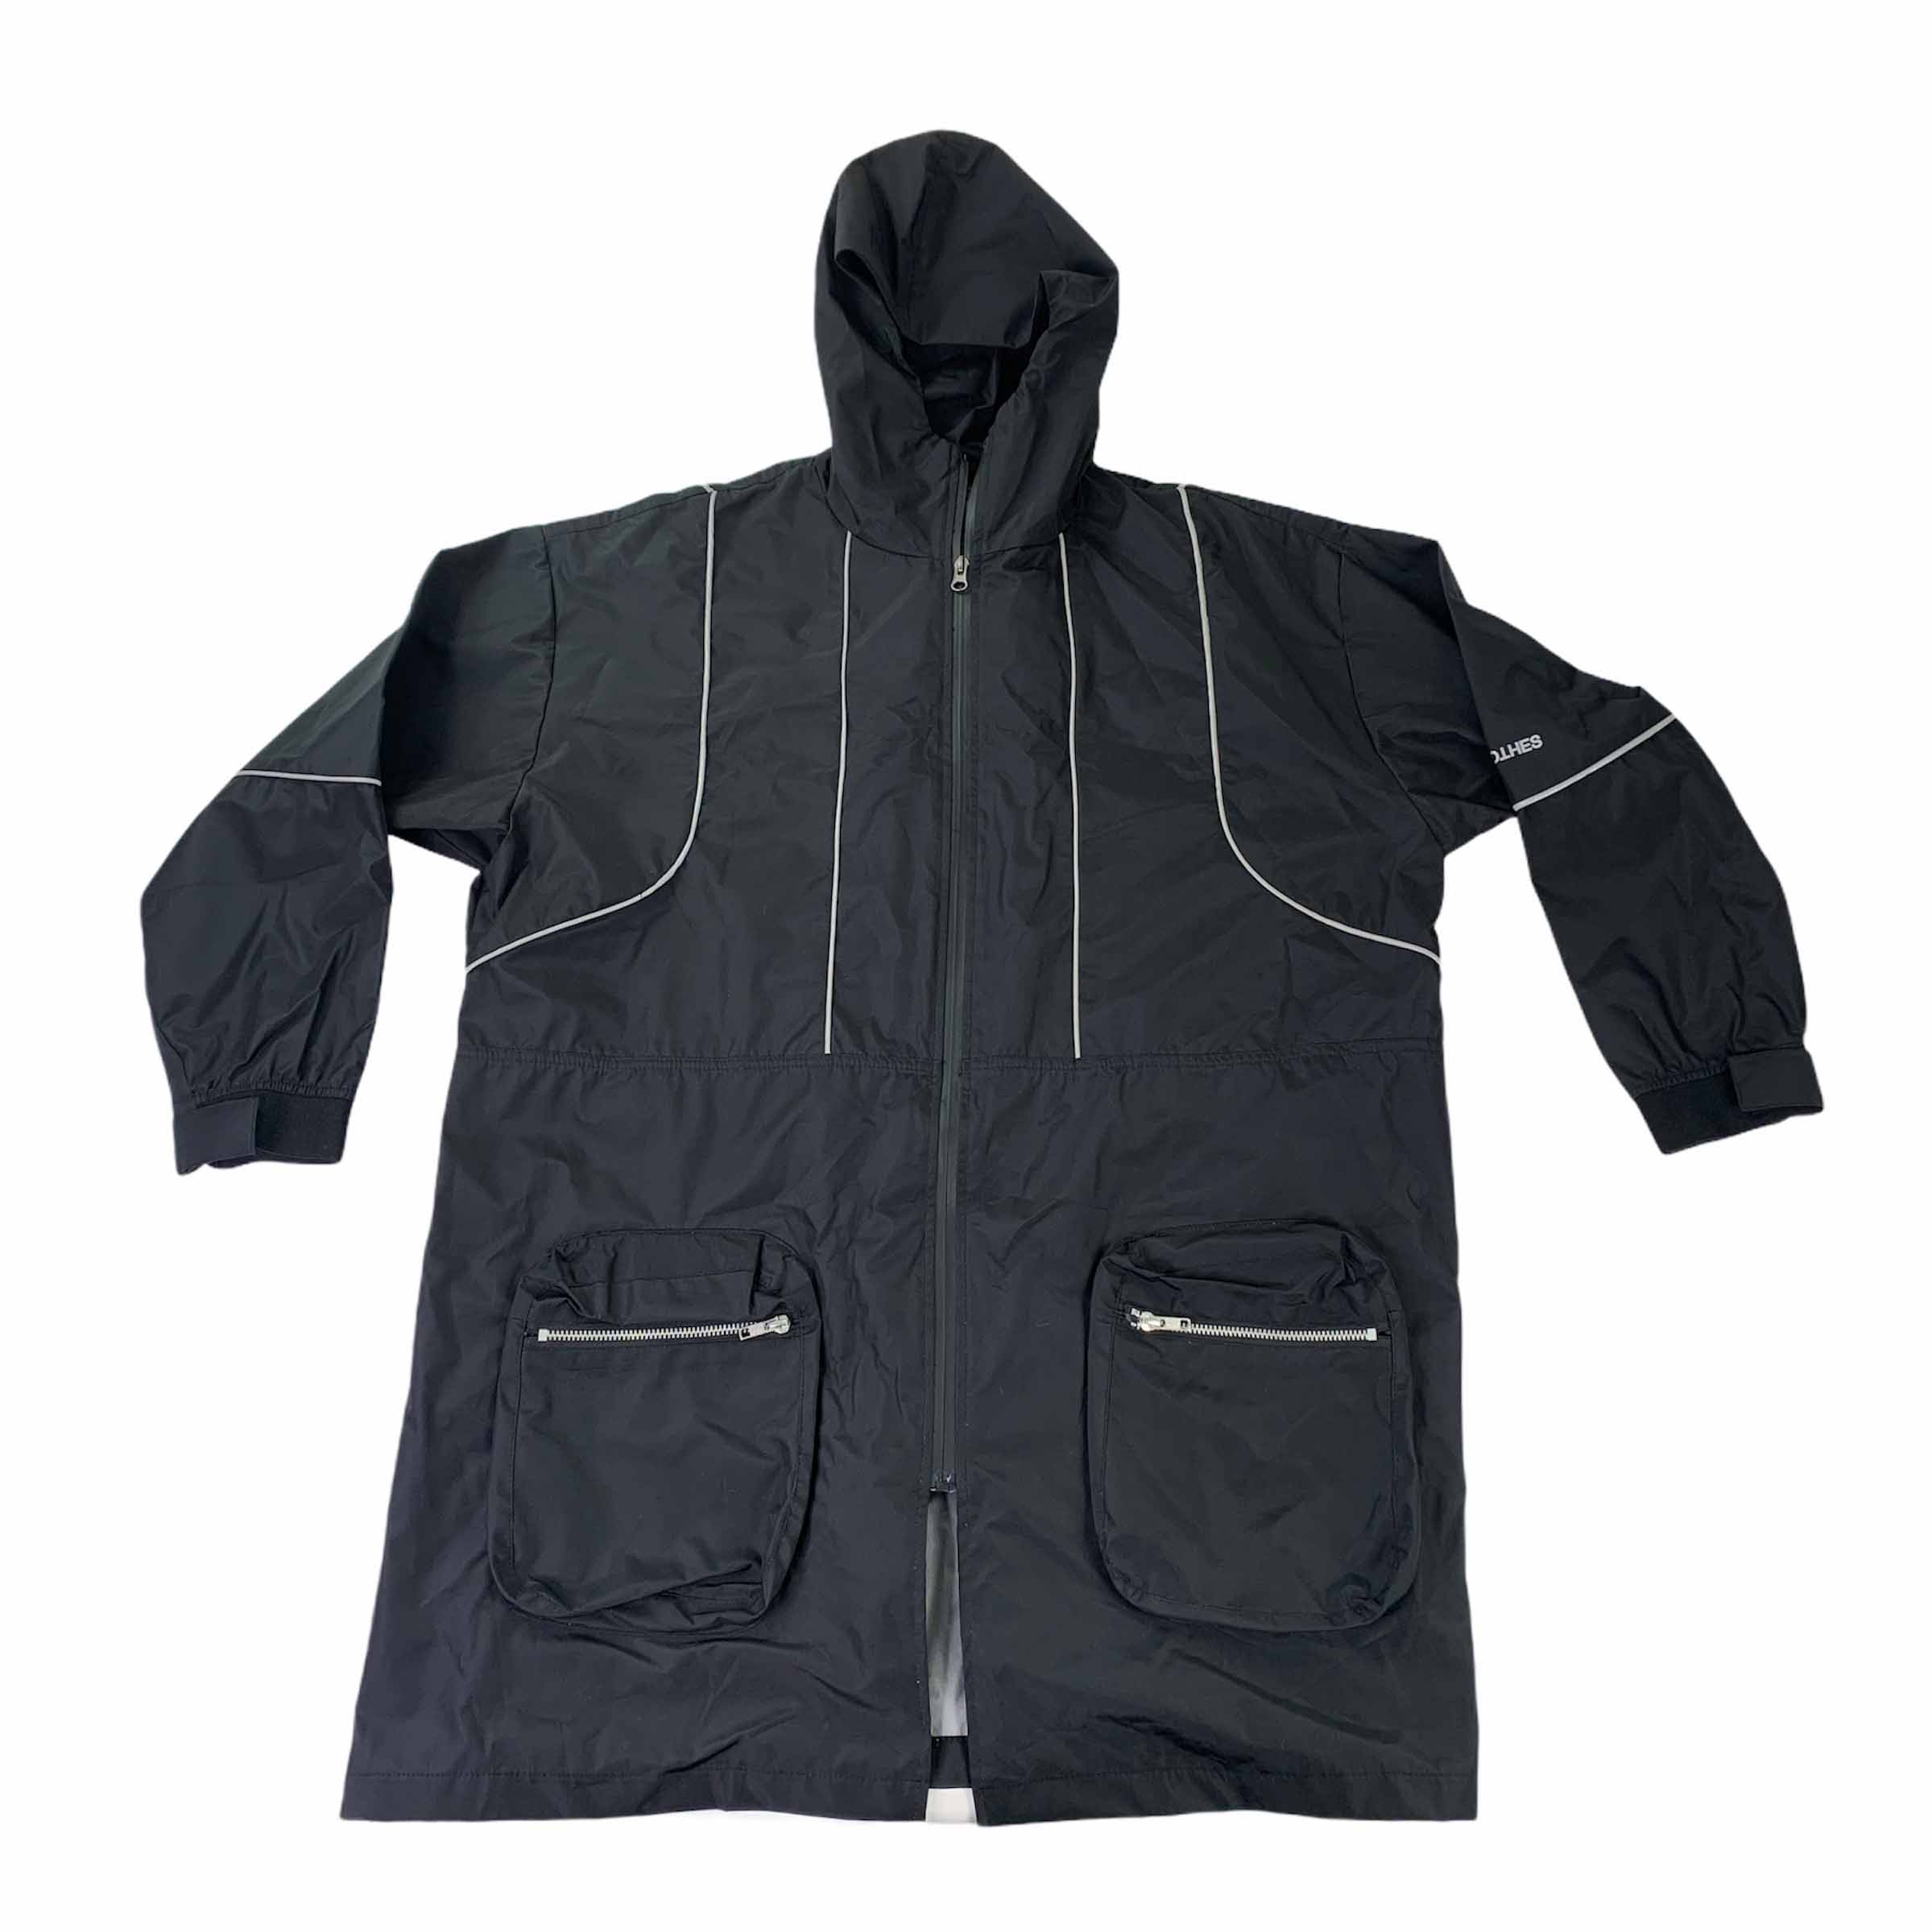 [Nondisclothes] Windbreaker Jacket BK - Size M